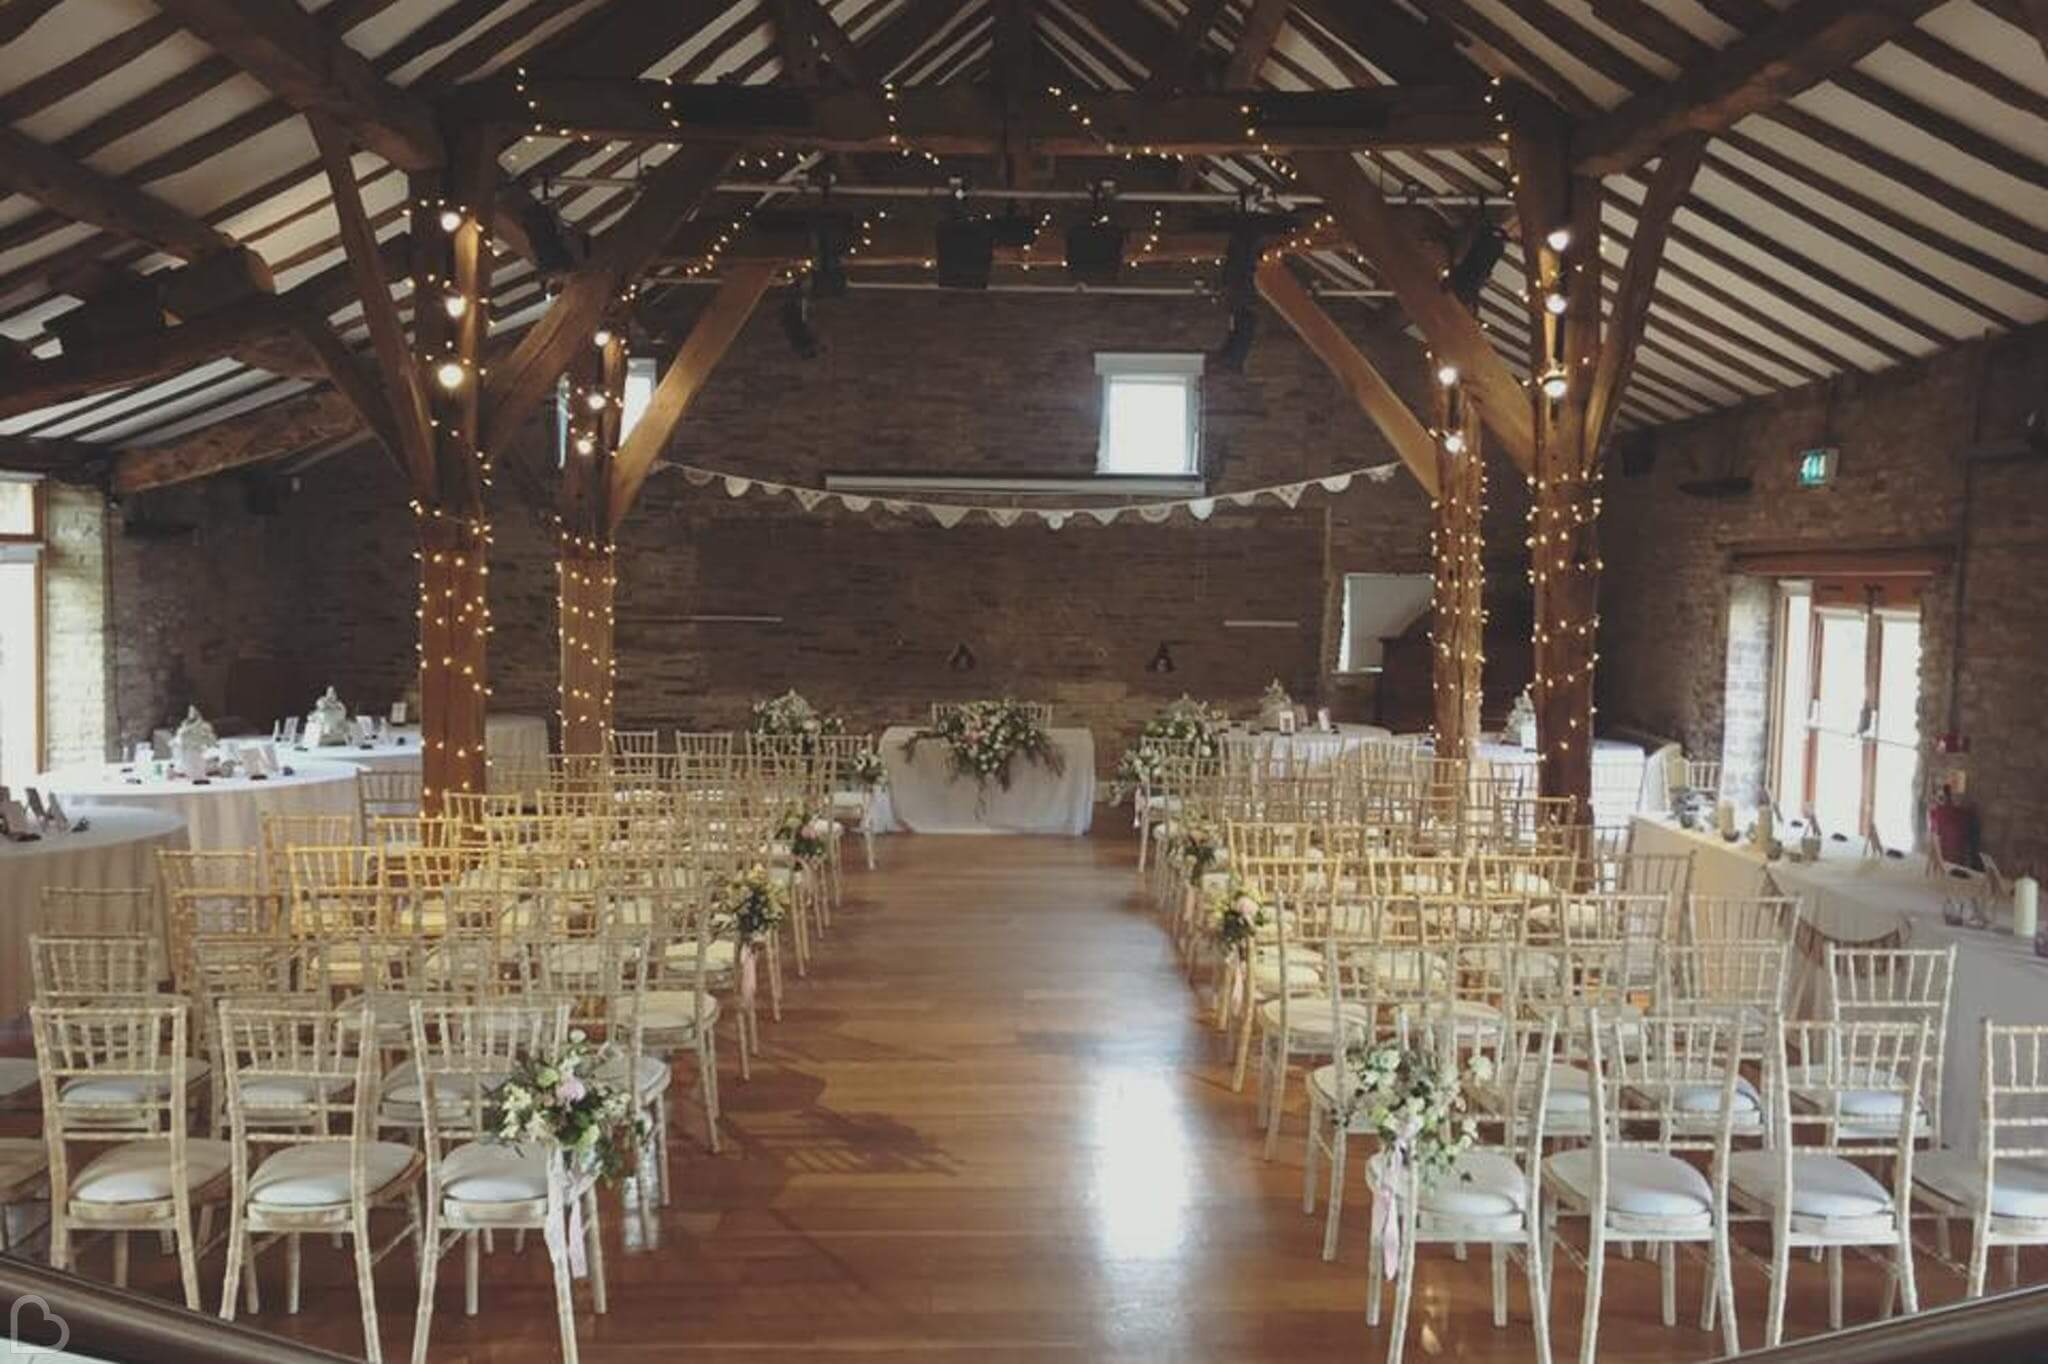 northorpe barn wedding venue